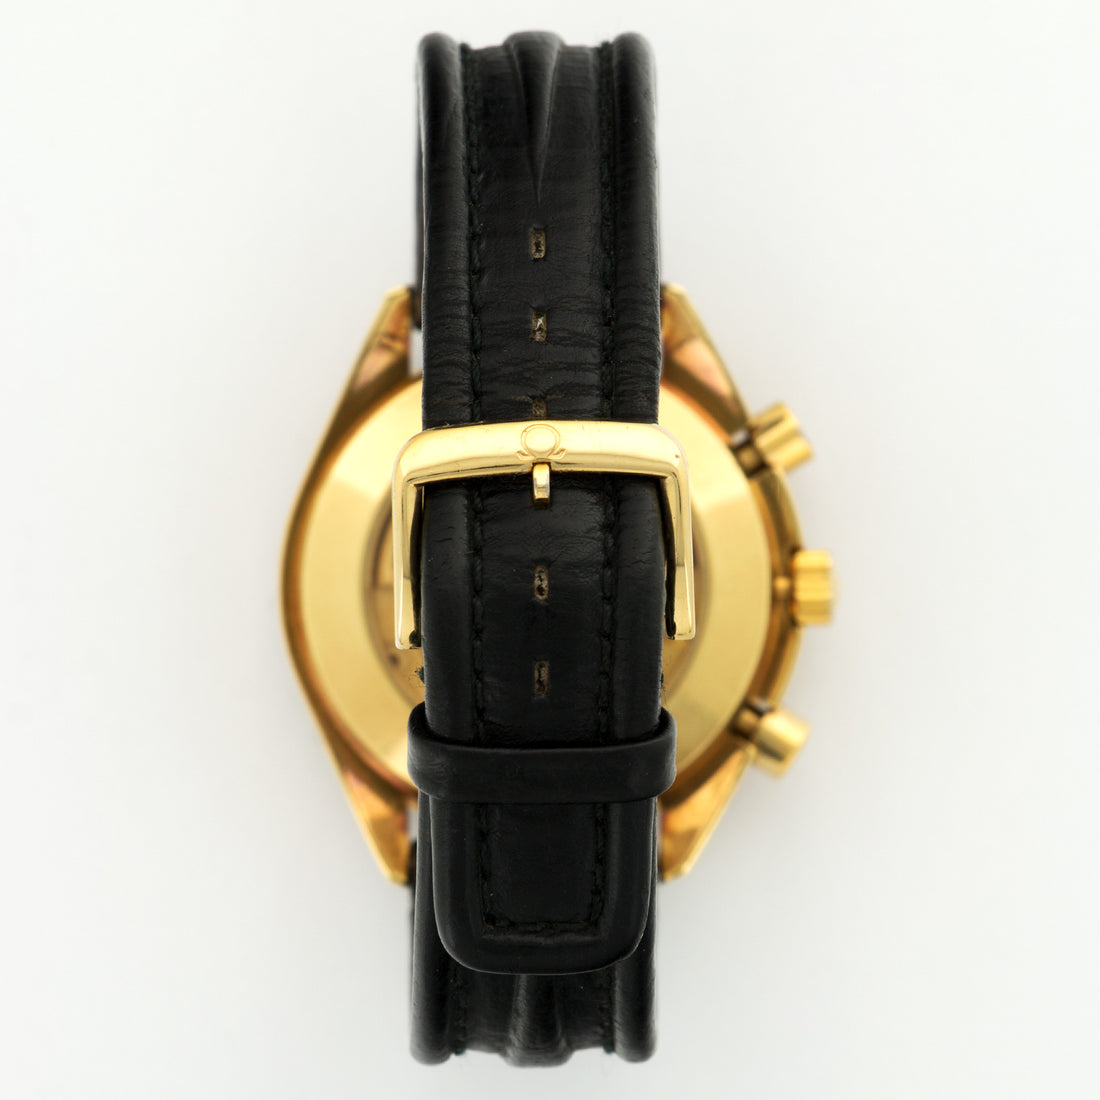 Omega Yellow Gold Speedmaster Strap Watch